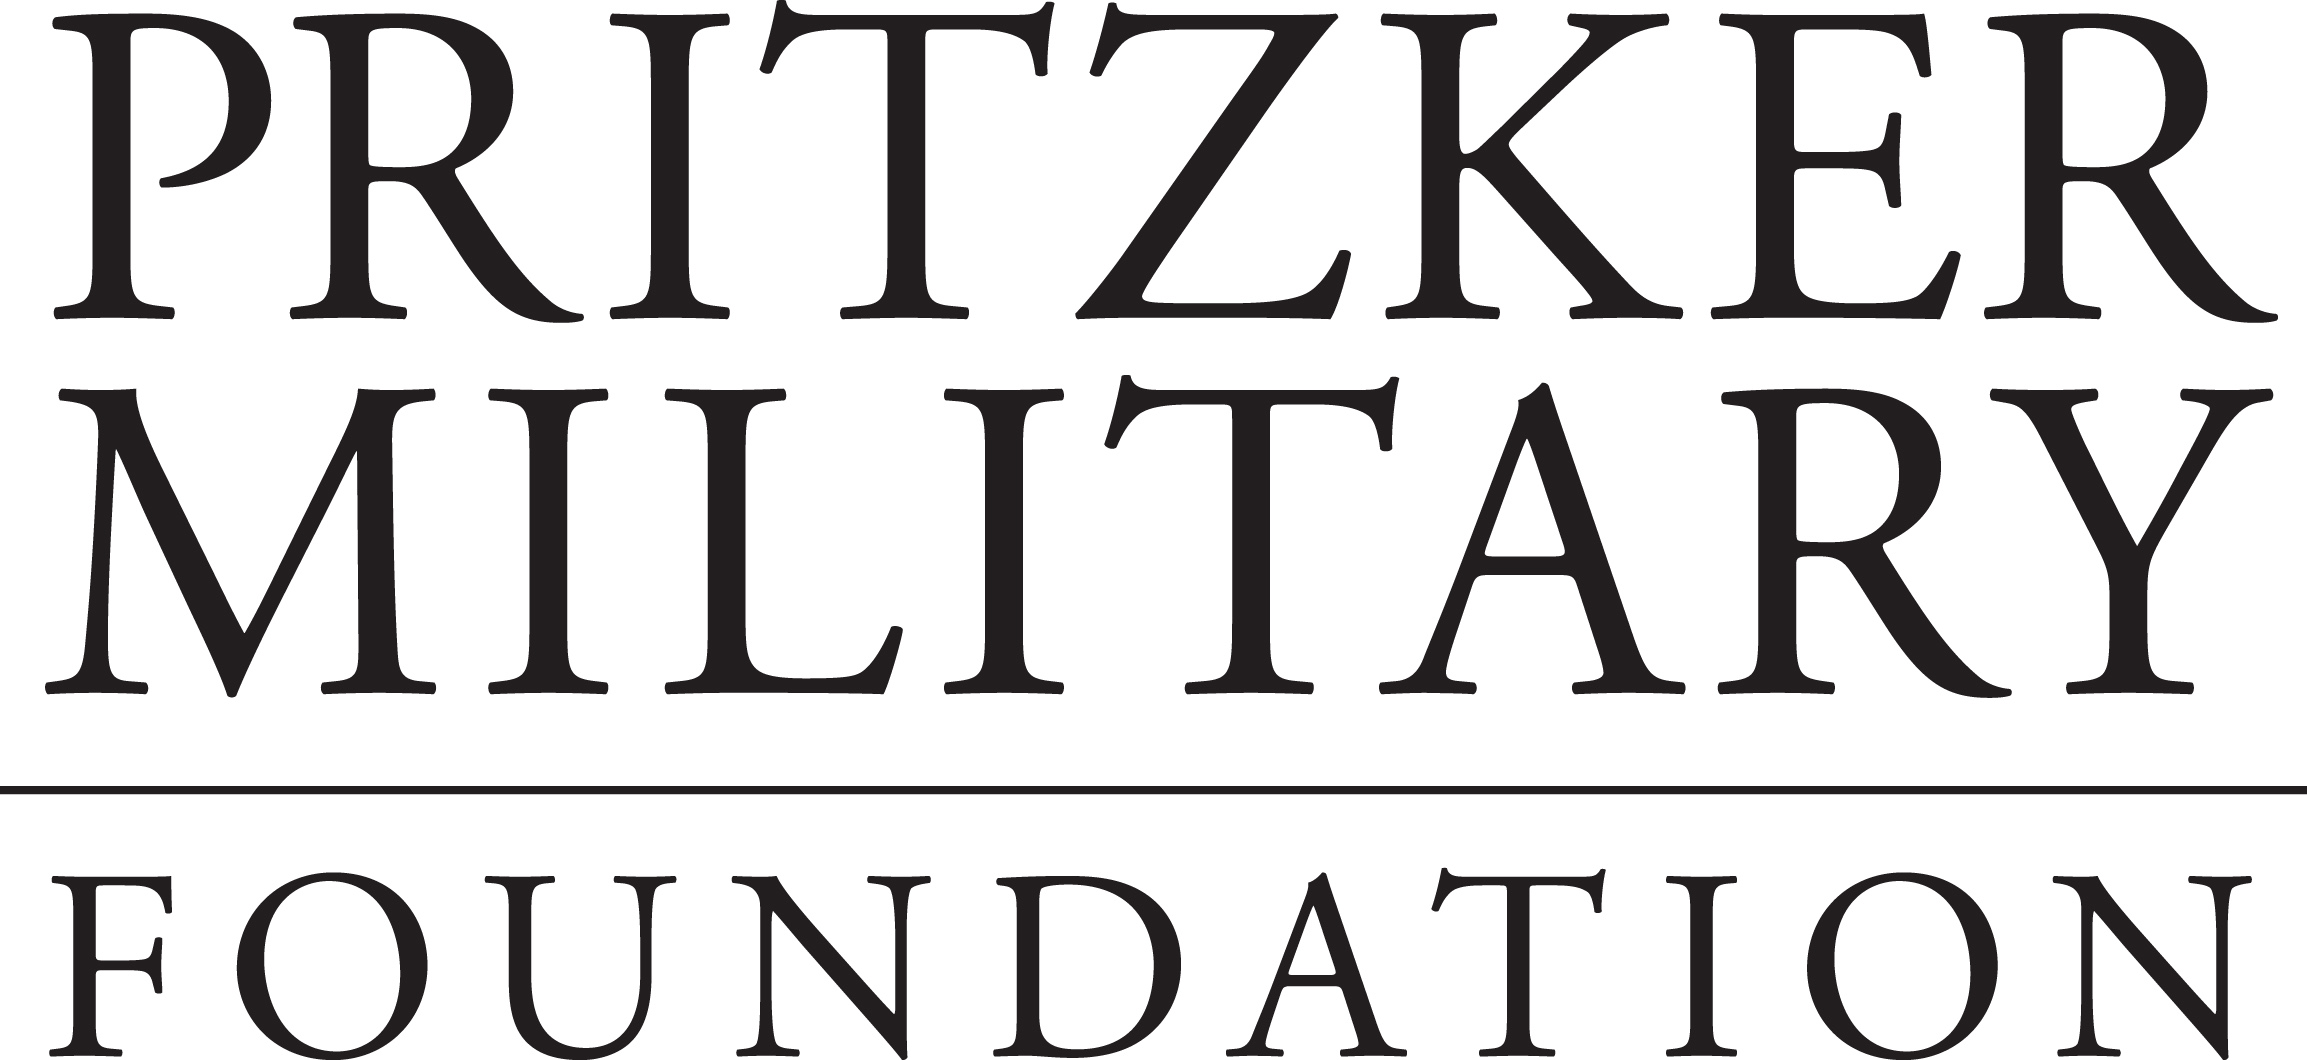 Pritzker Military Foundation